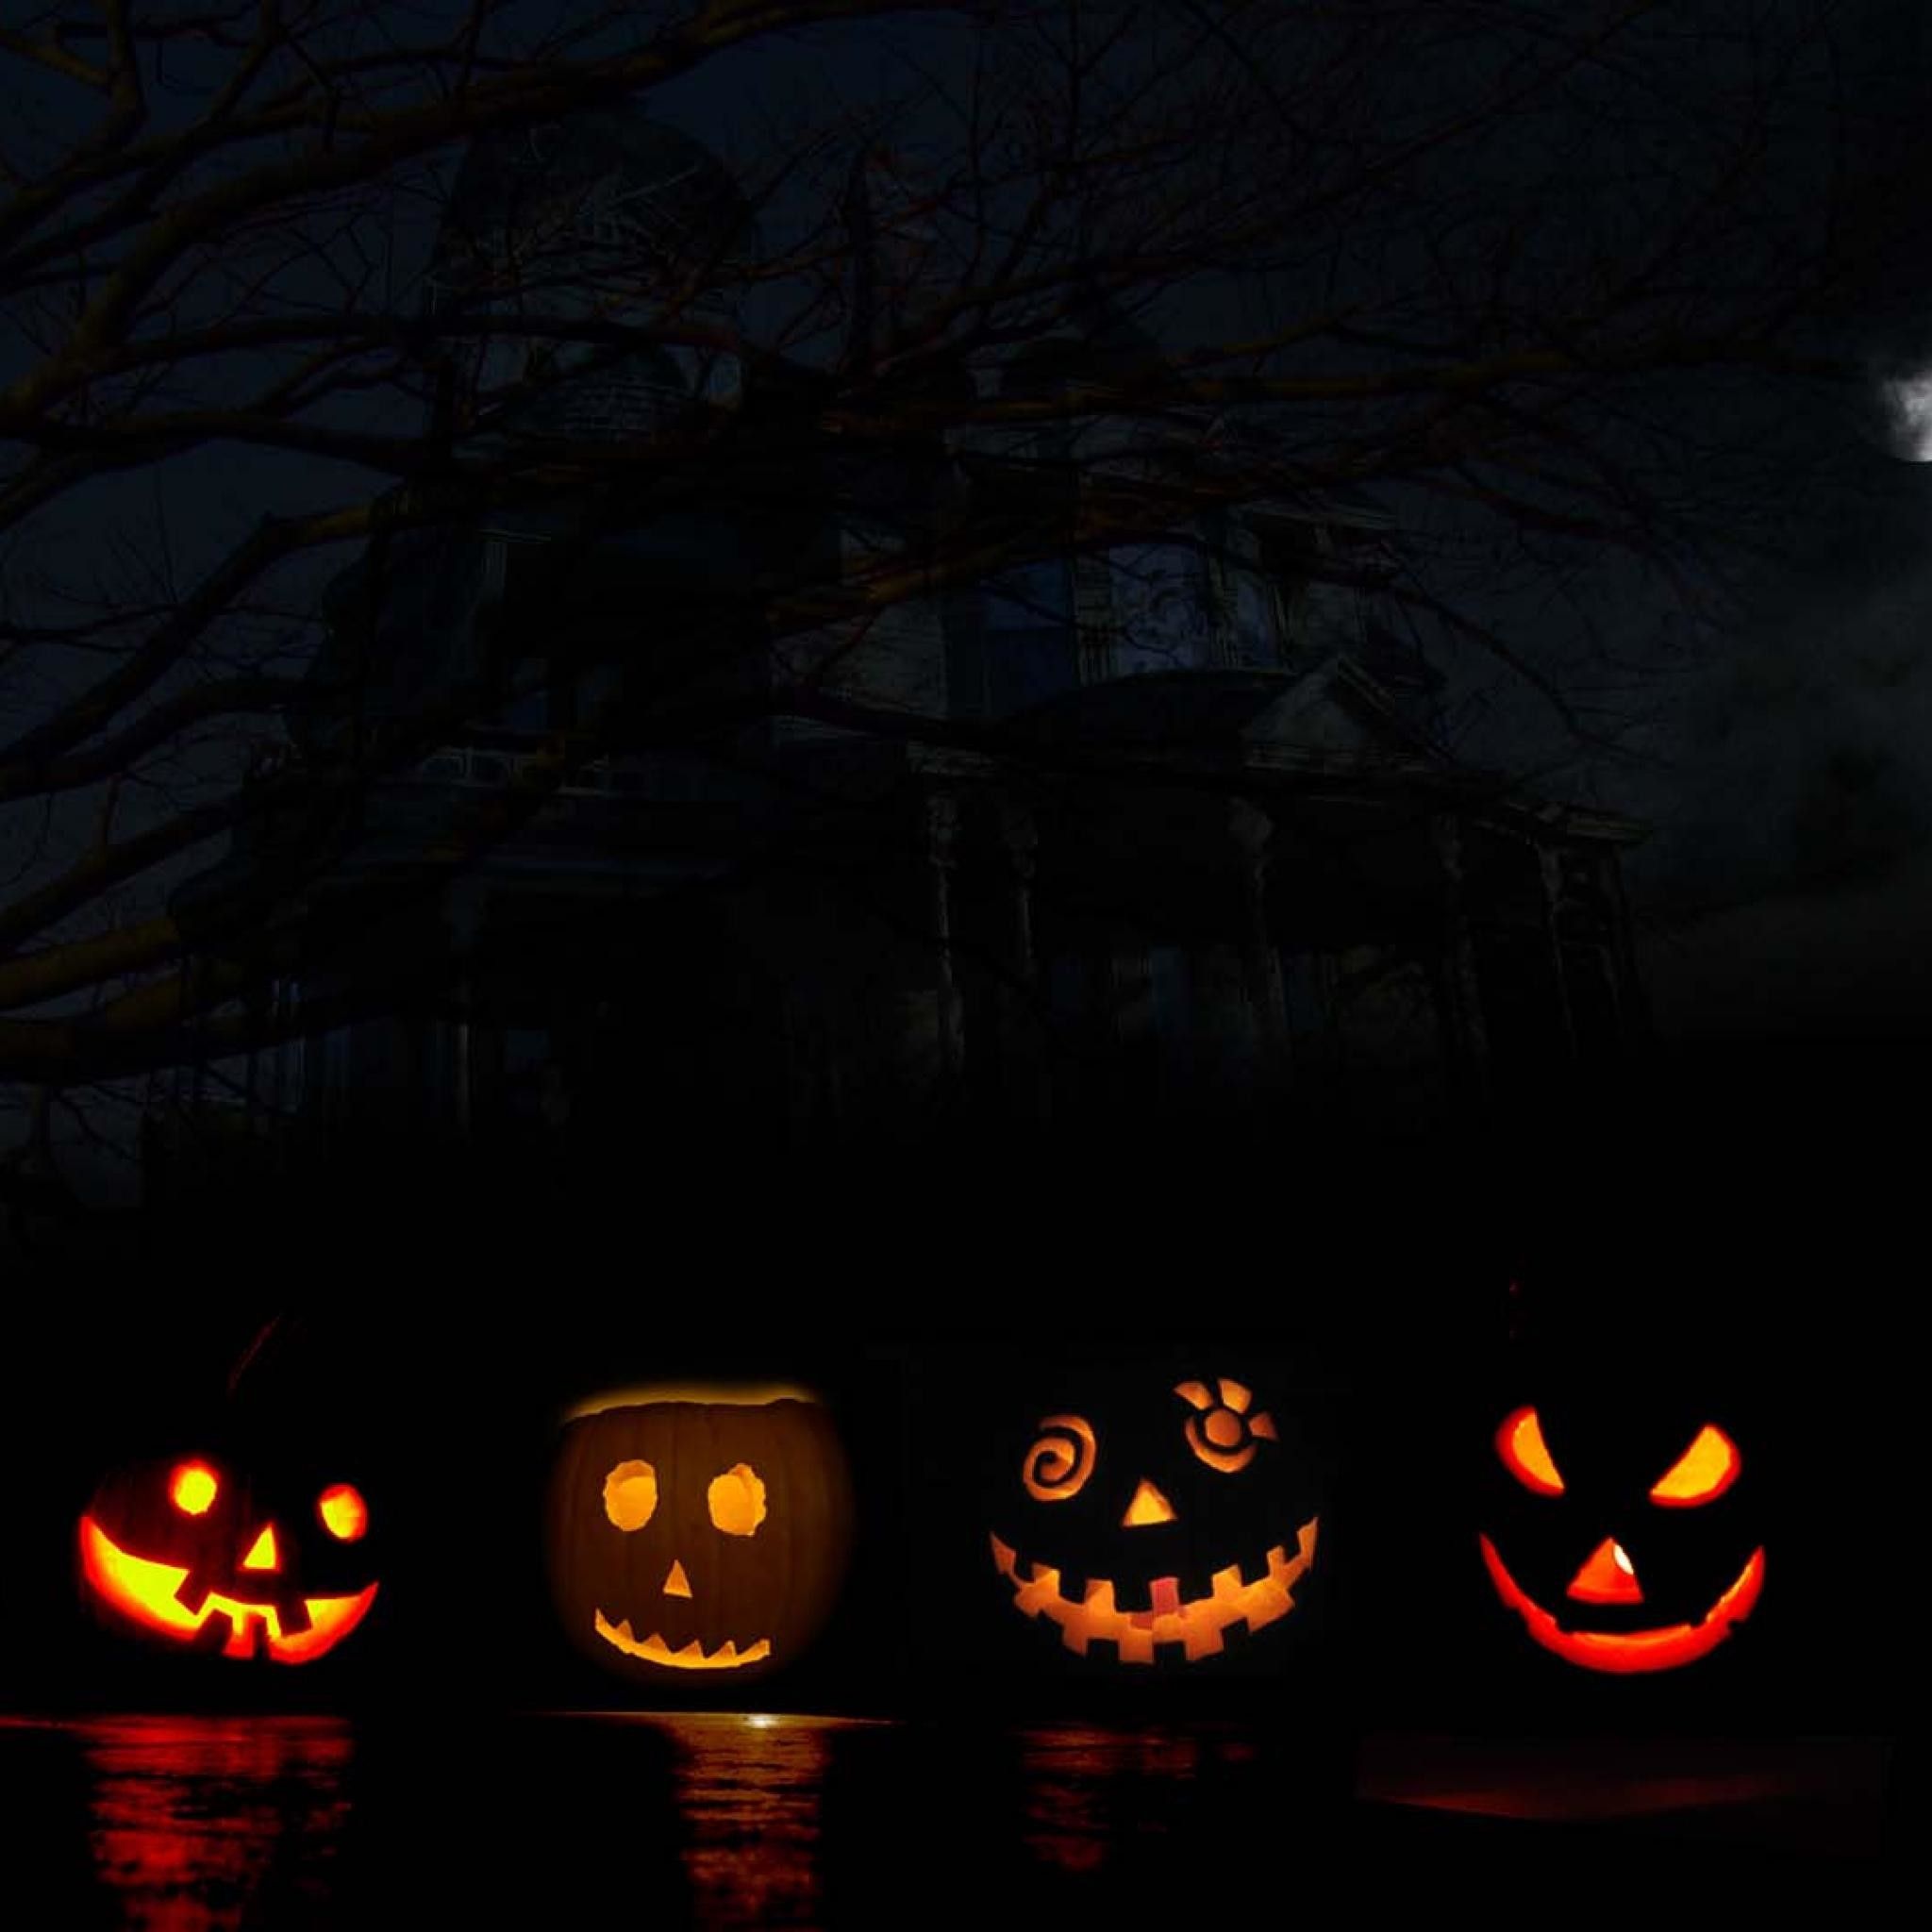 Live Photo iPhone Wallpaper. Pumpkin wallpaper, Scary halloween pumpkins, Halloween pumpkins carvings